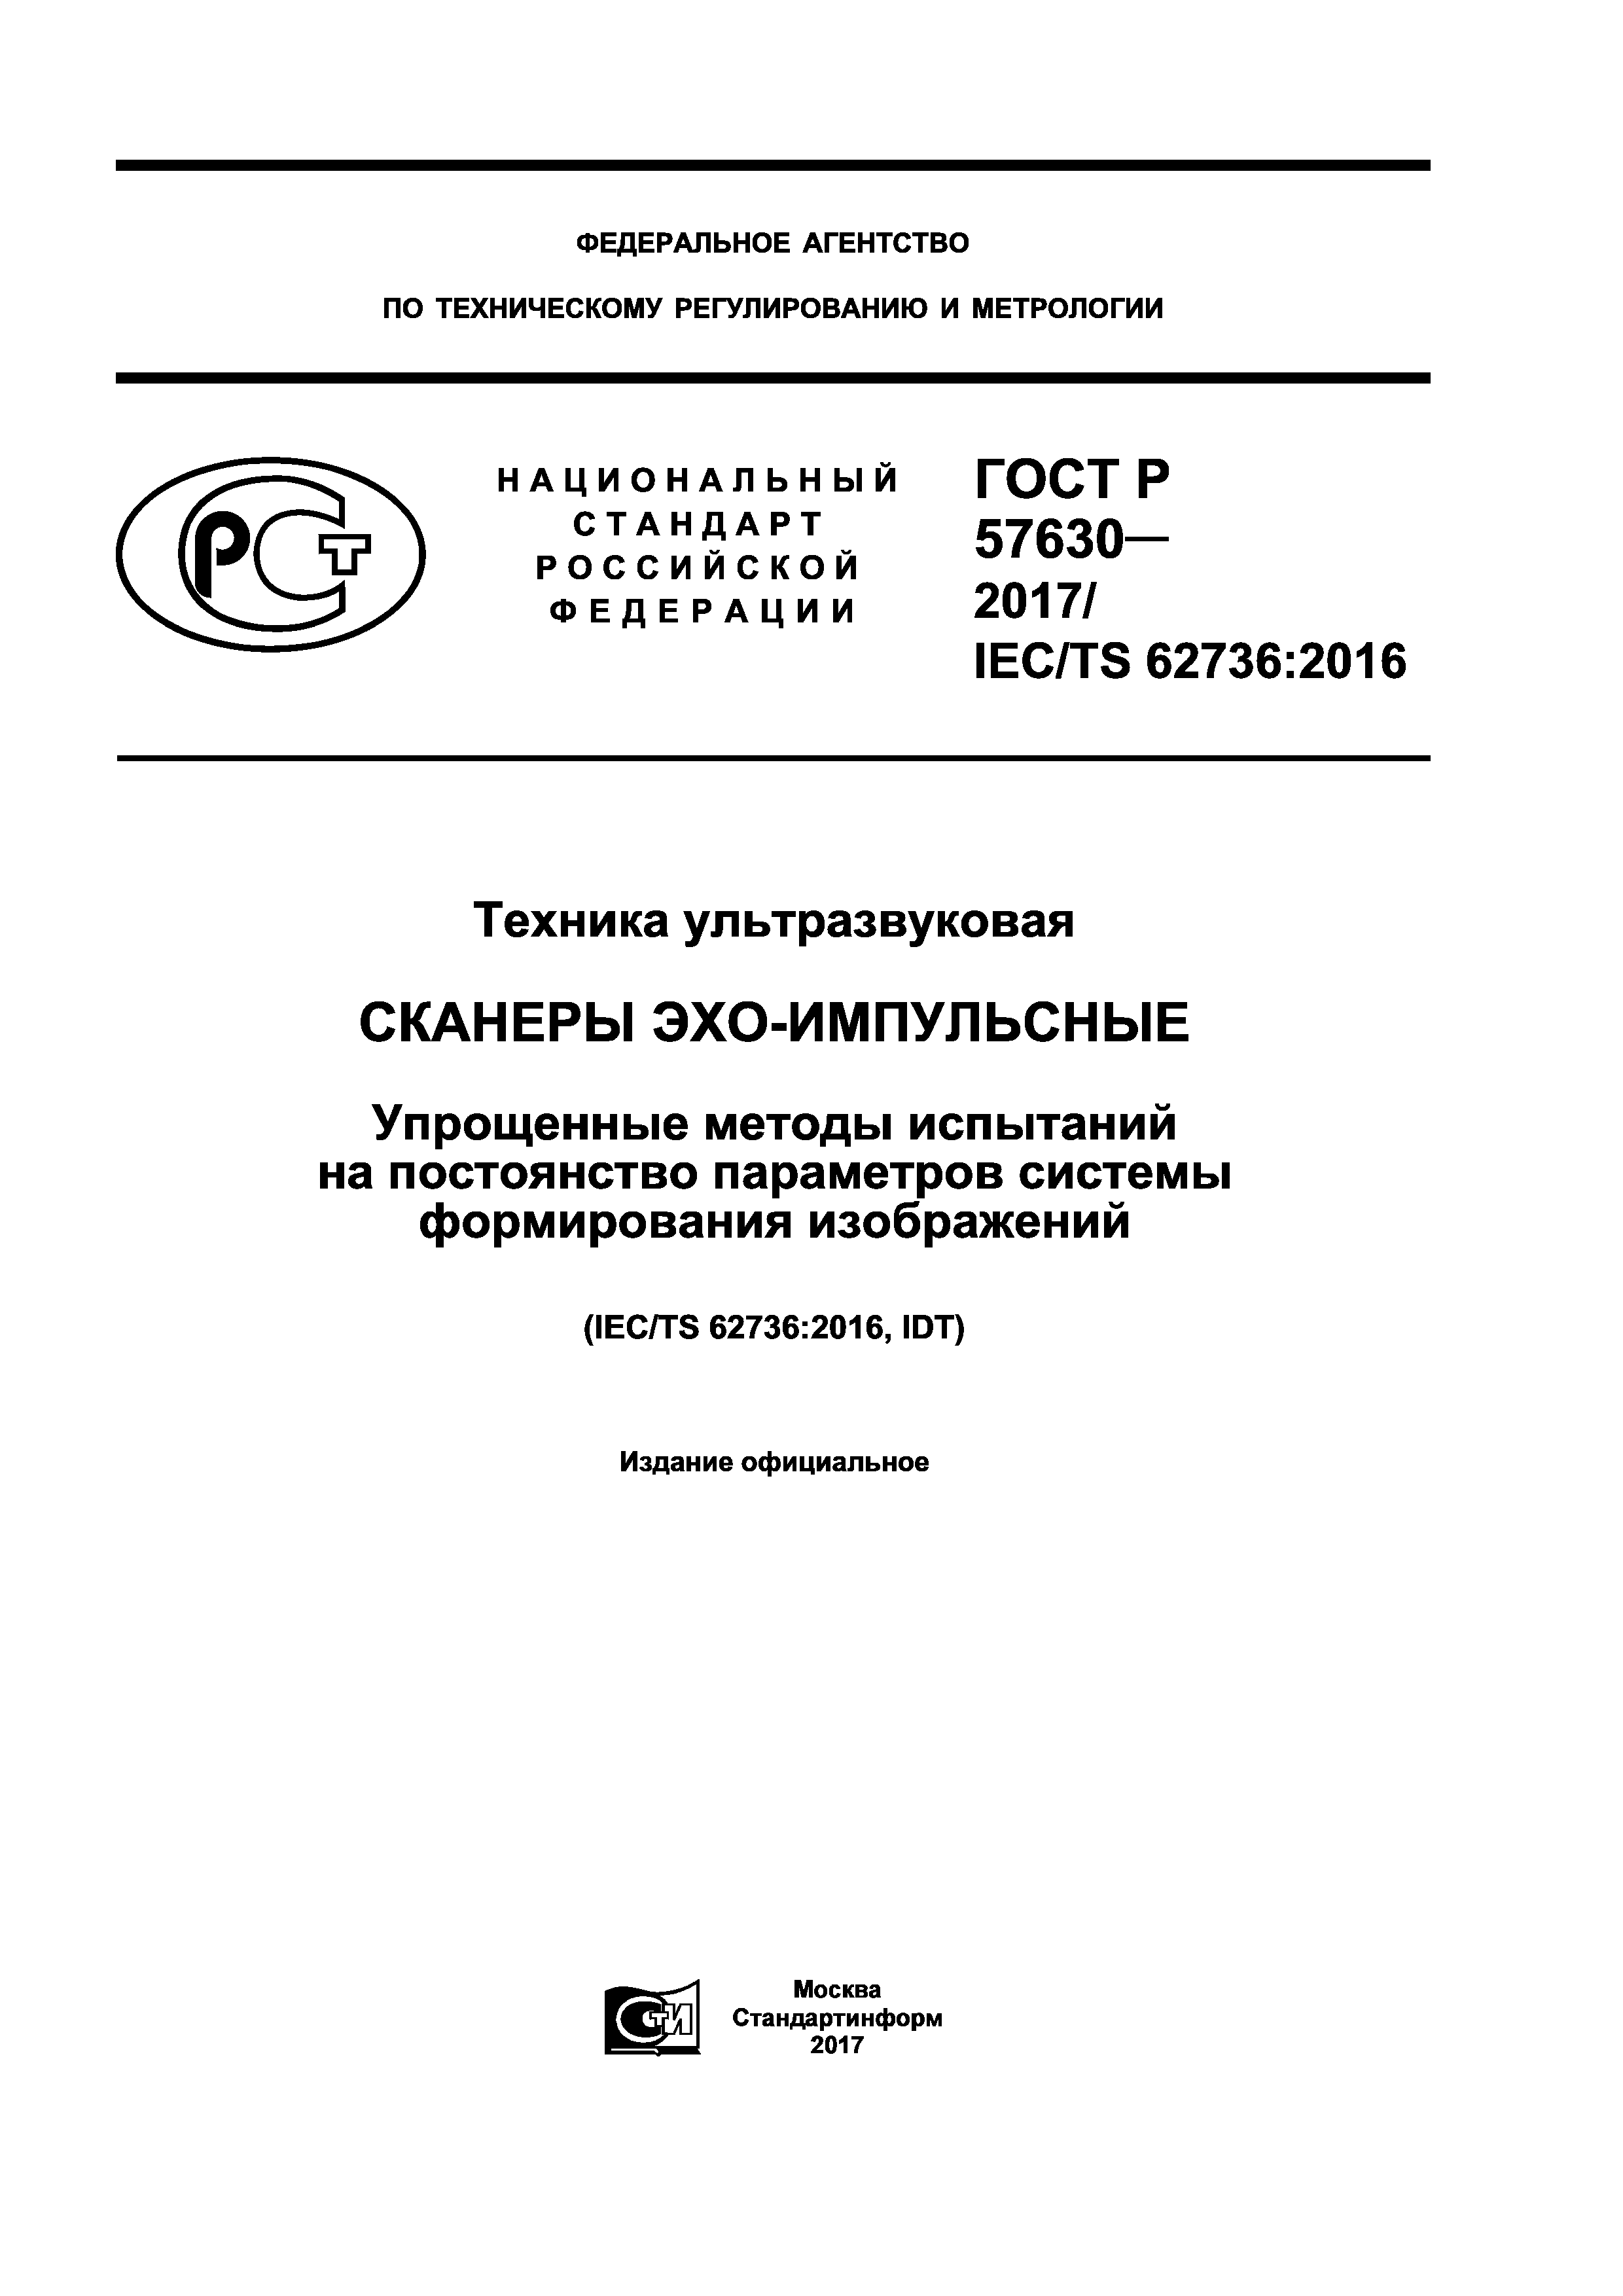 ГОСТ Р 57630-2017